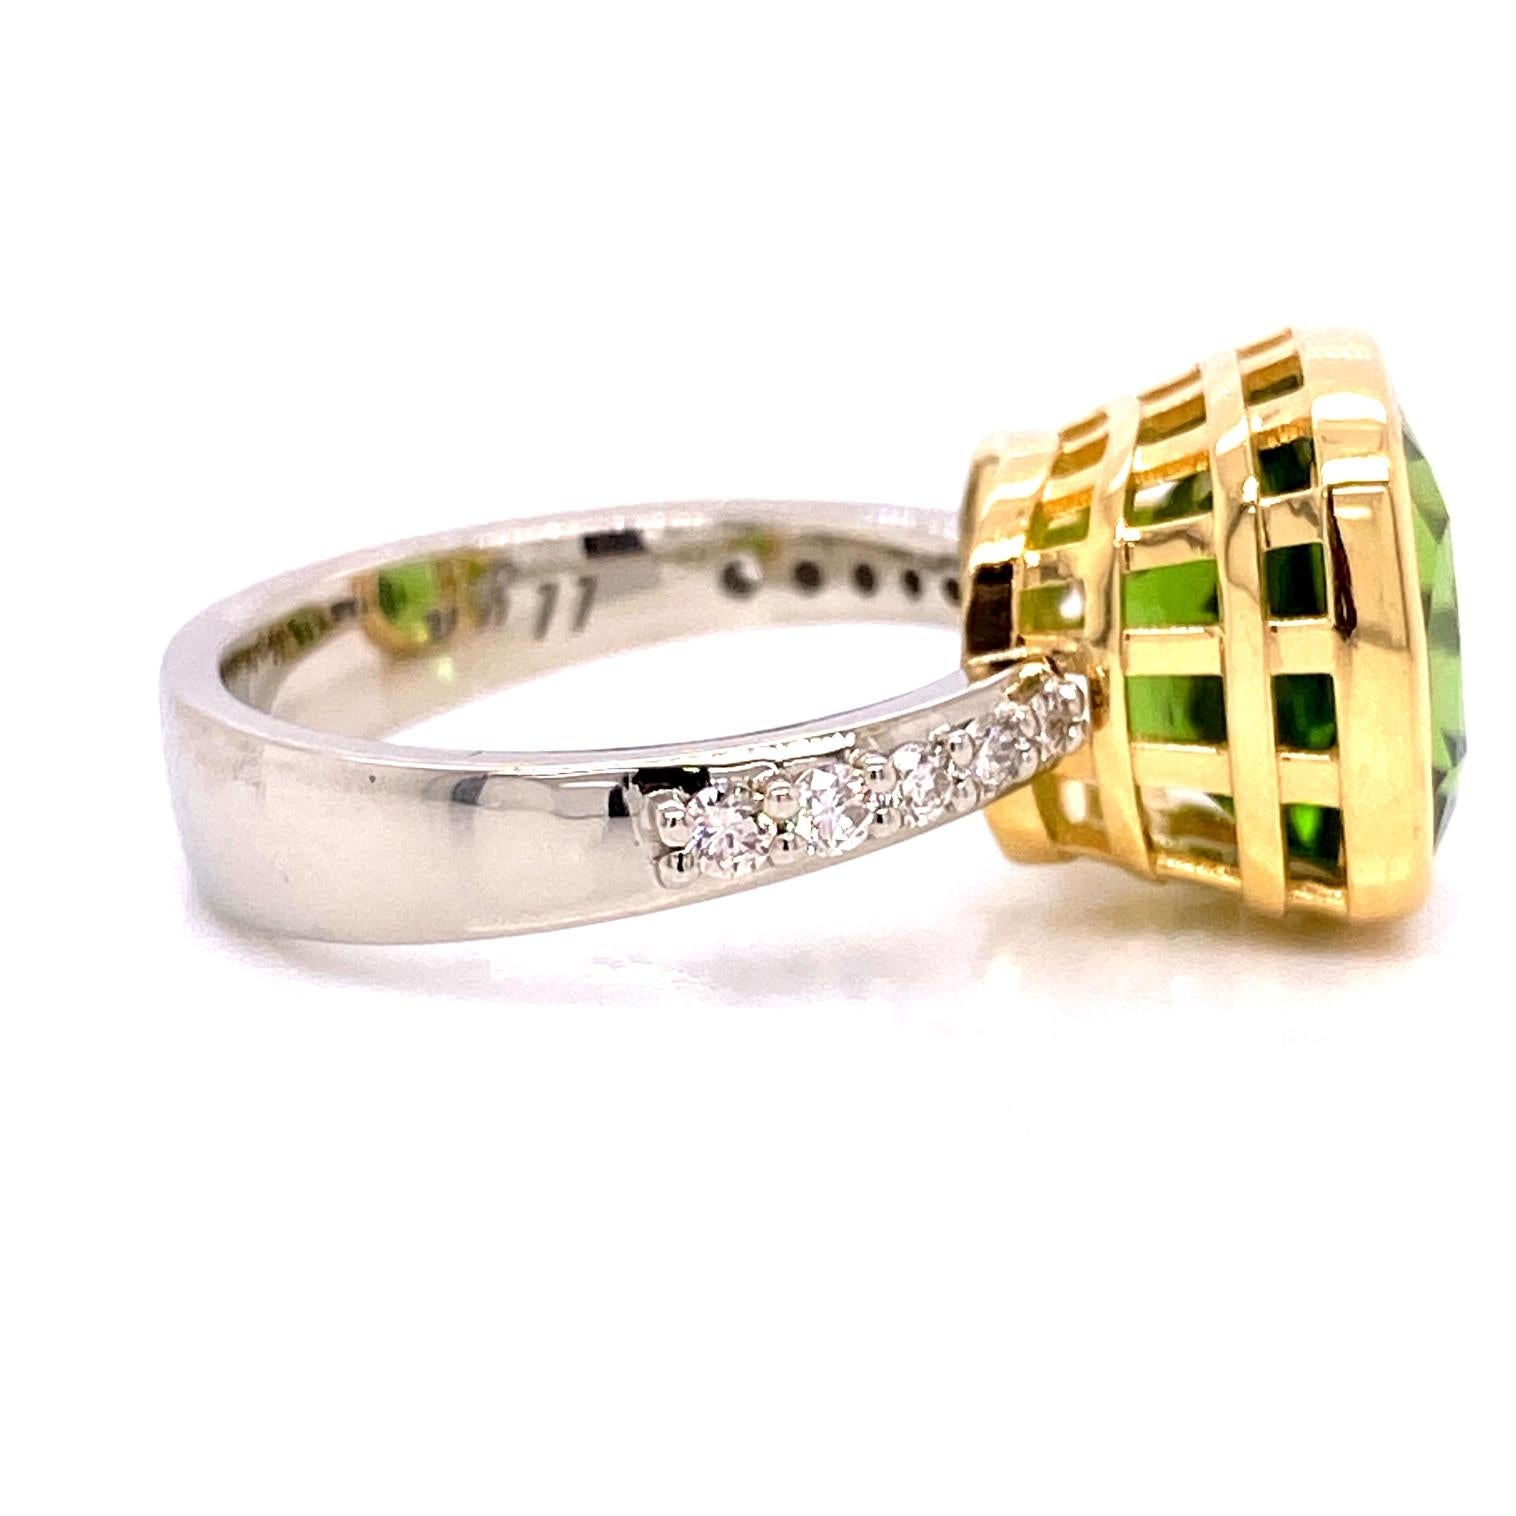 Contemporary 18 Karat White and Yellow Gold Cushion Cut Peridot Ring with White Diamonds